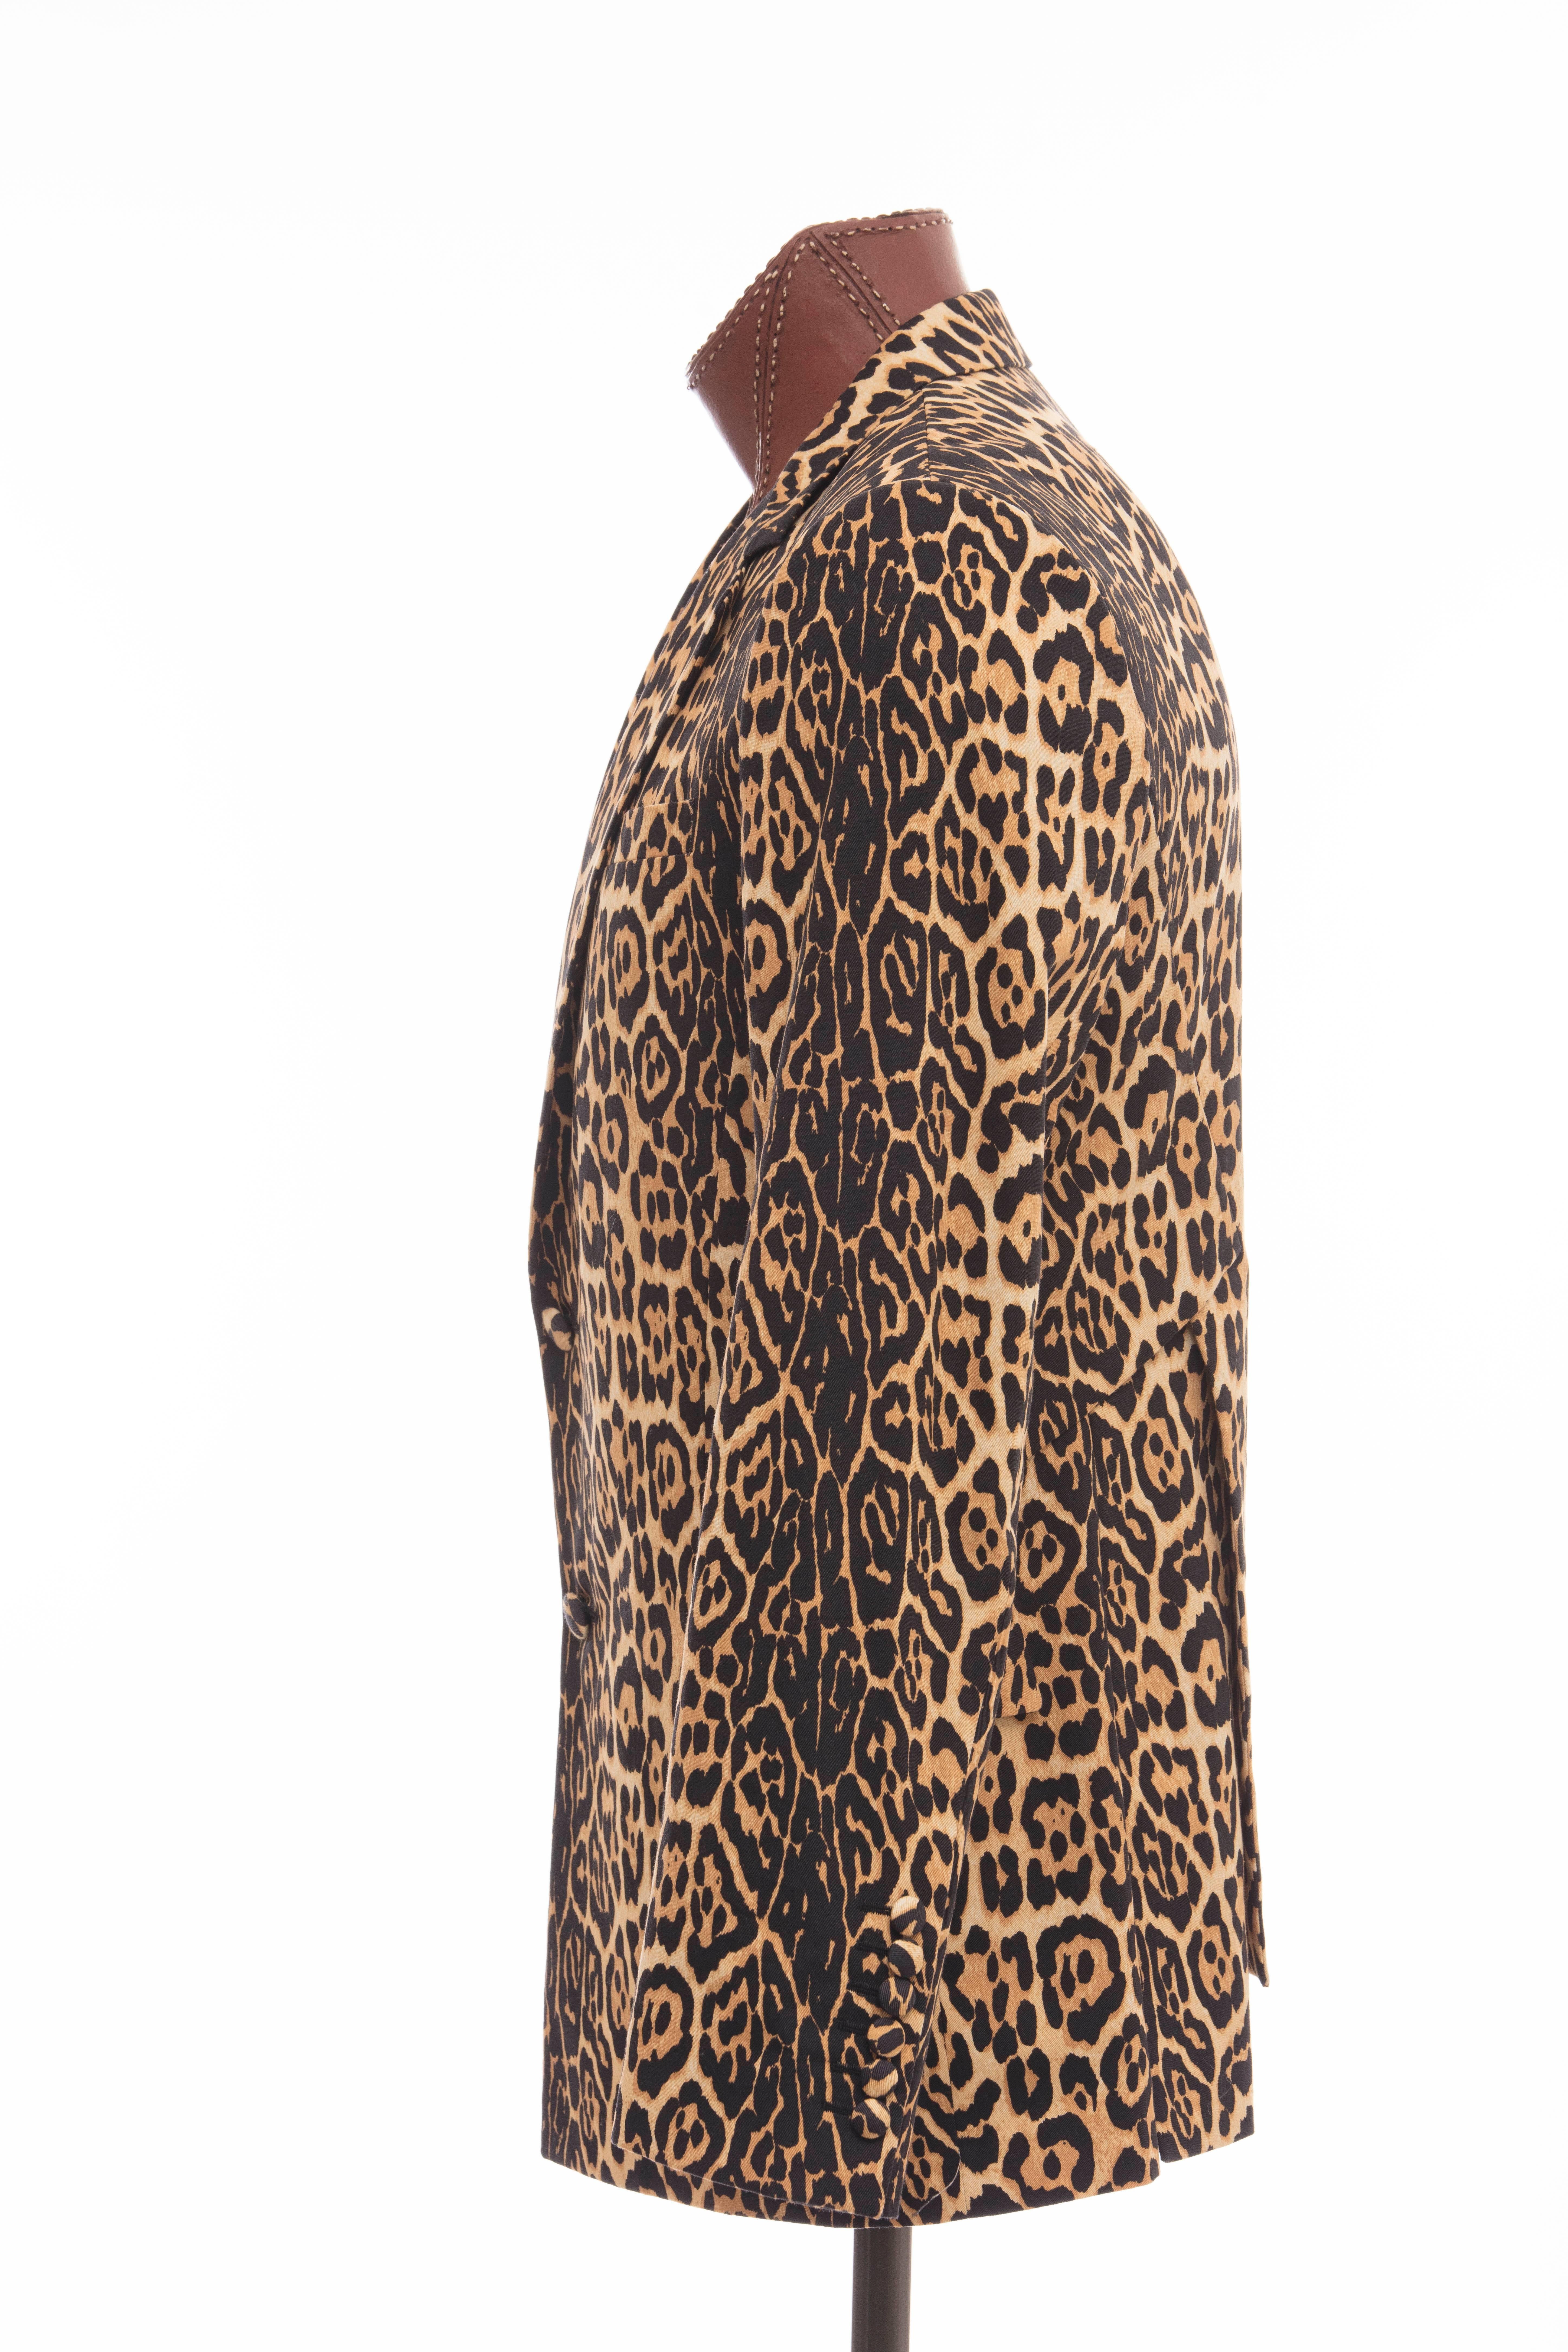 Givenchy Riccardo Tisci Men's Runway Cotton Leopard Blazer, Spring 2011 1